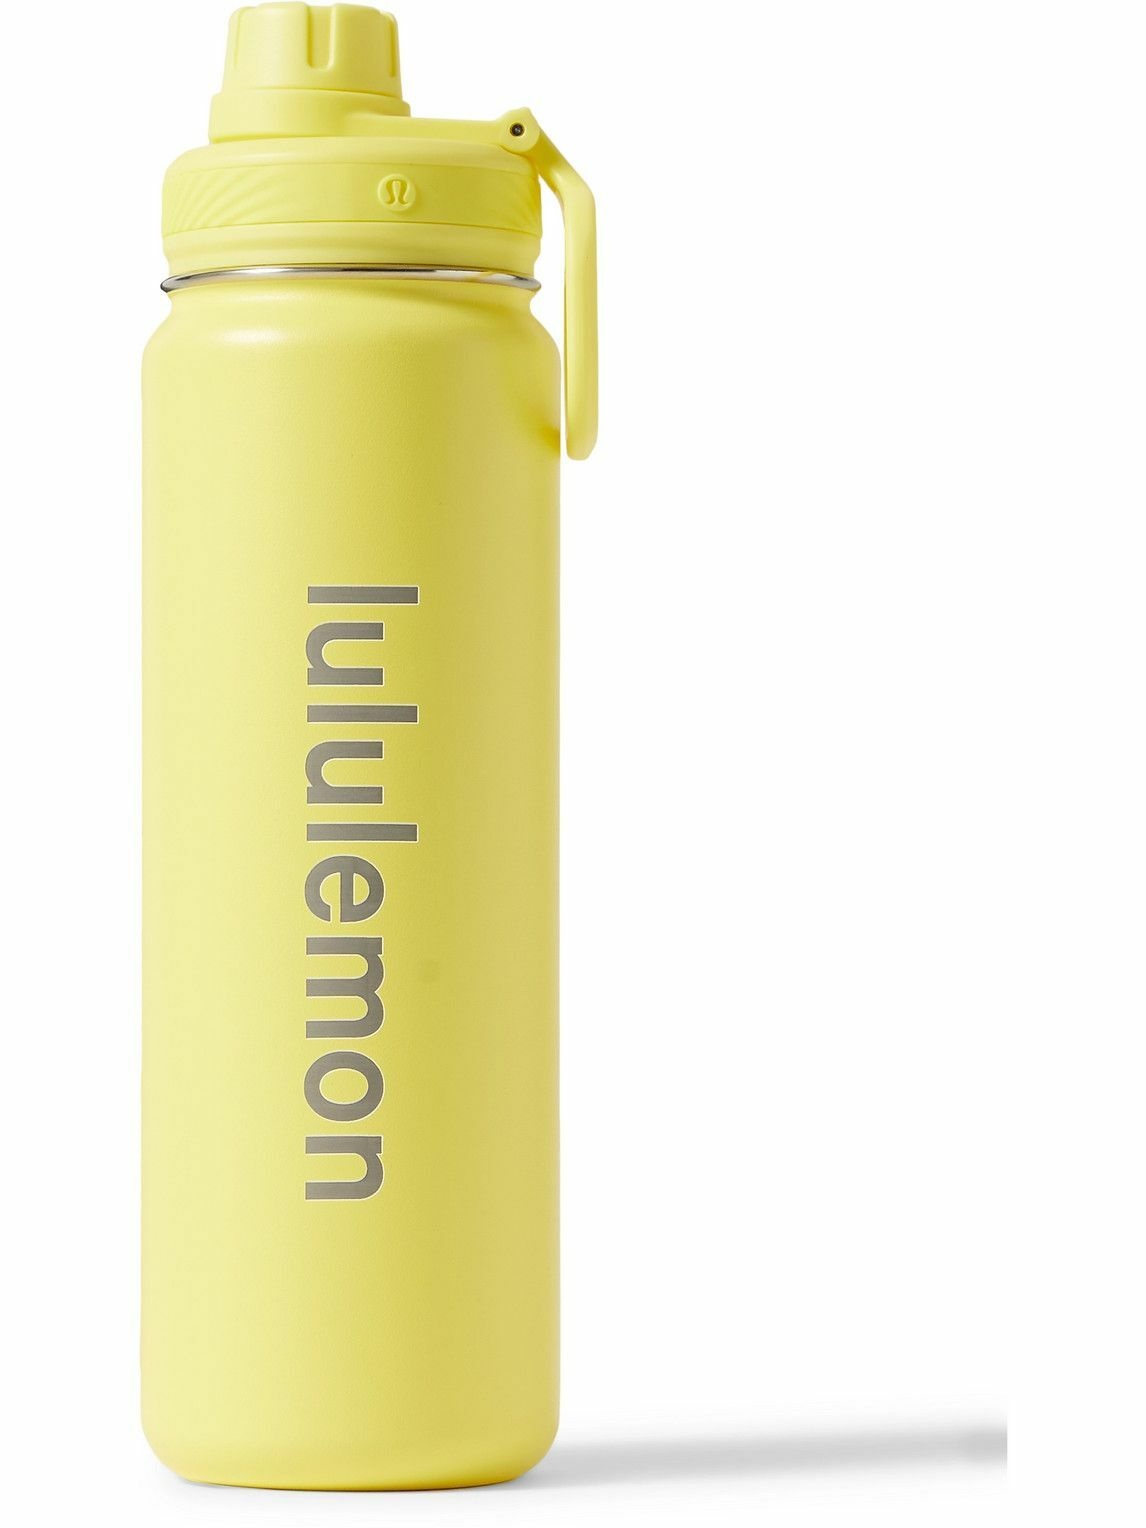 Lululemon - Back To Life Sport Water Bottle, 710ml Lululemon